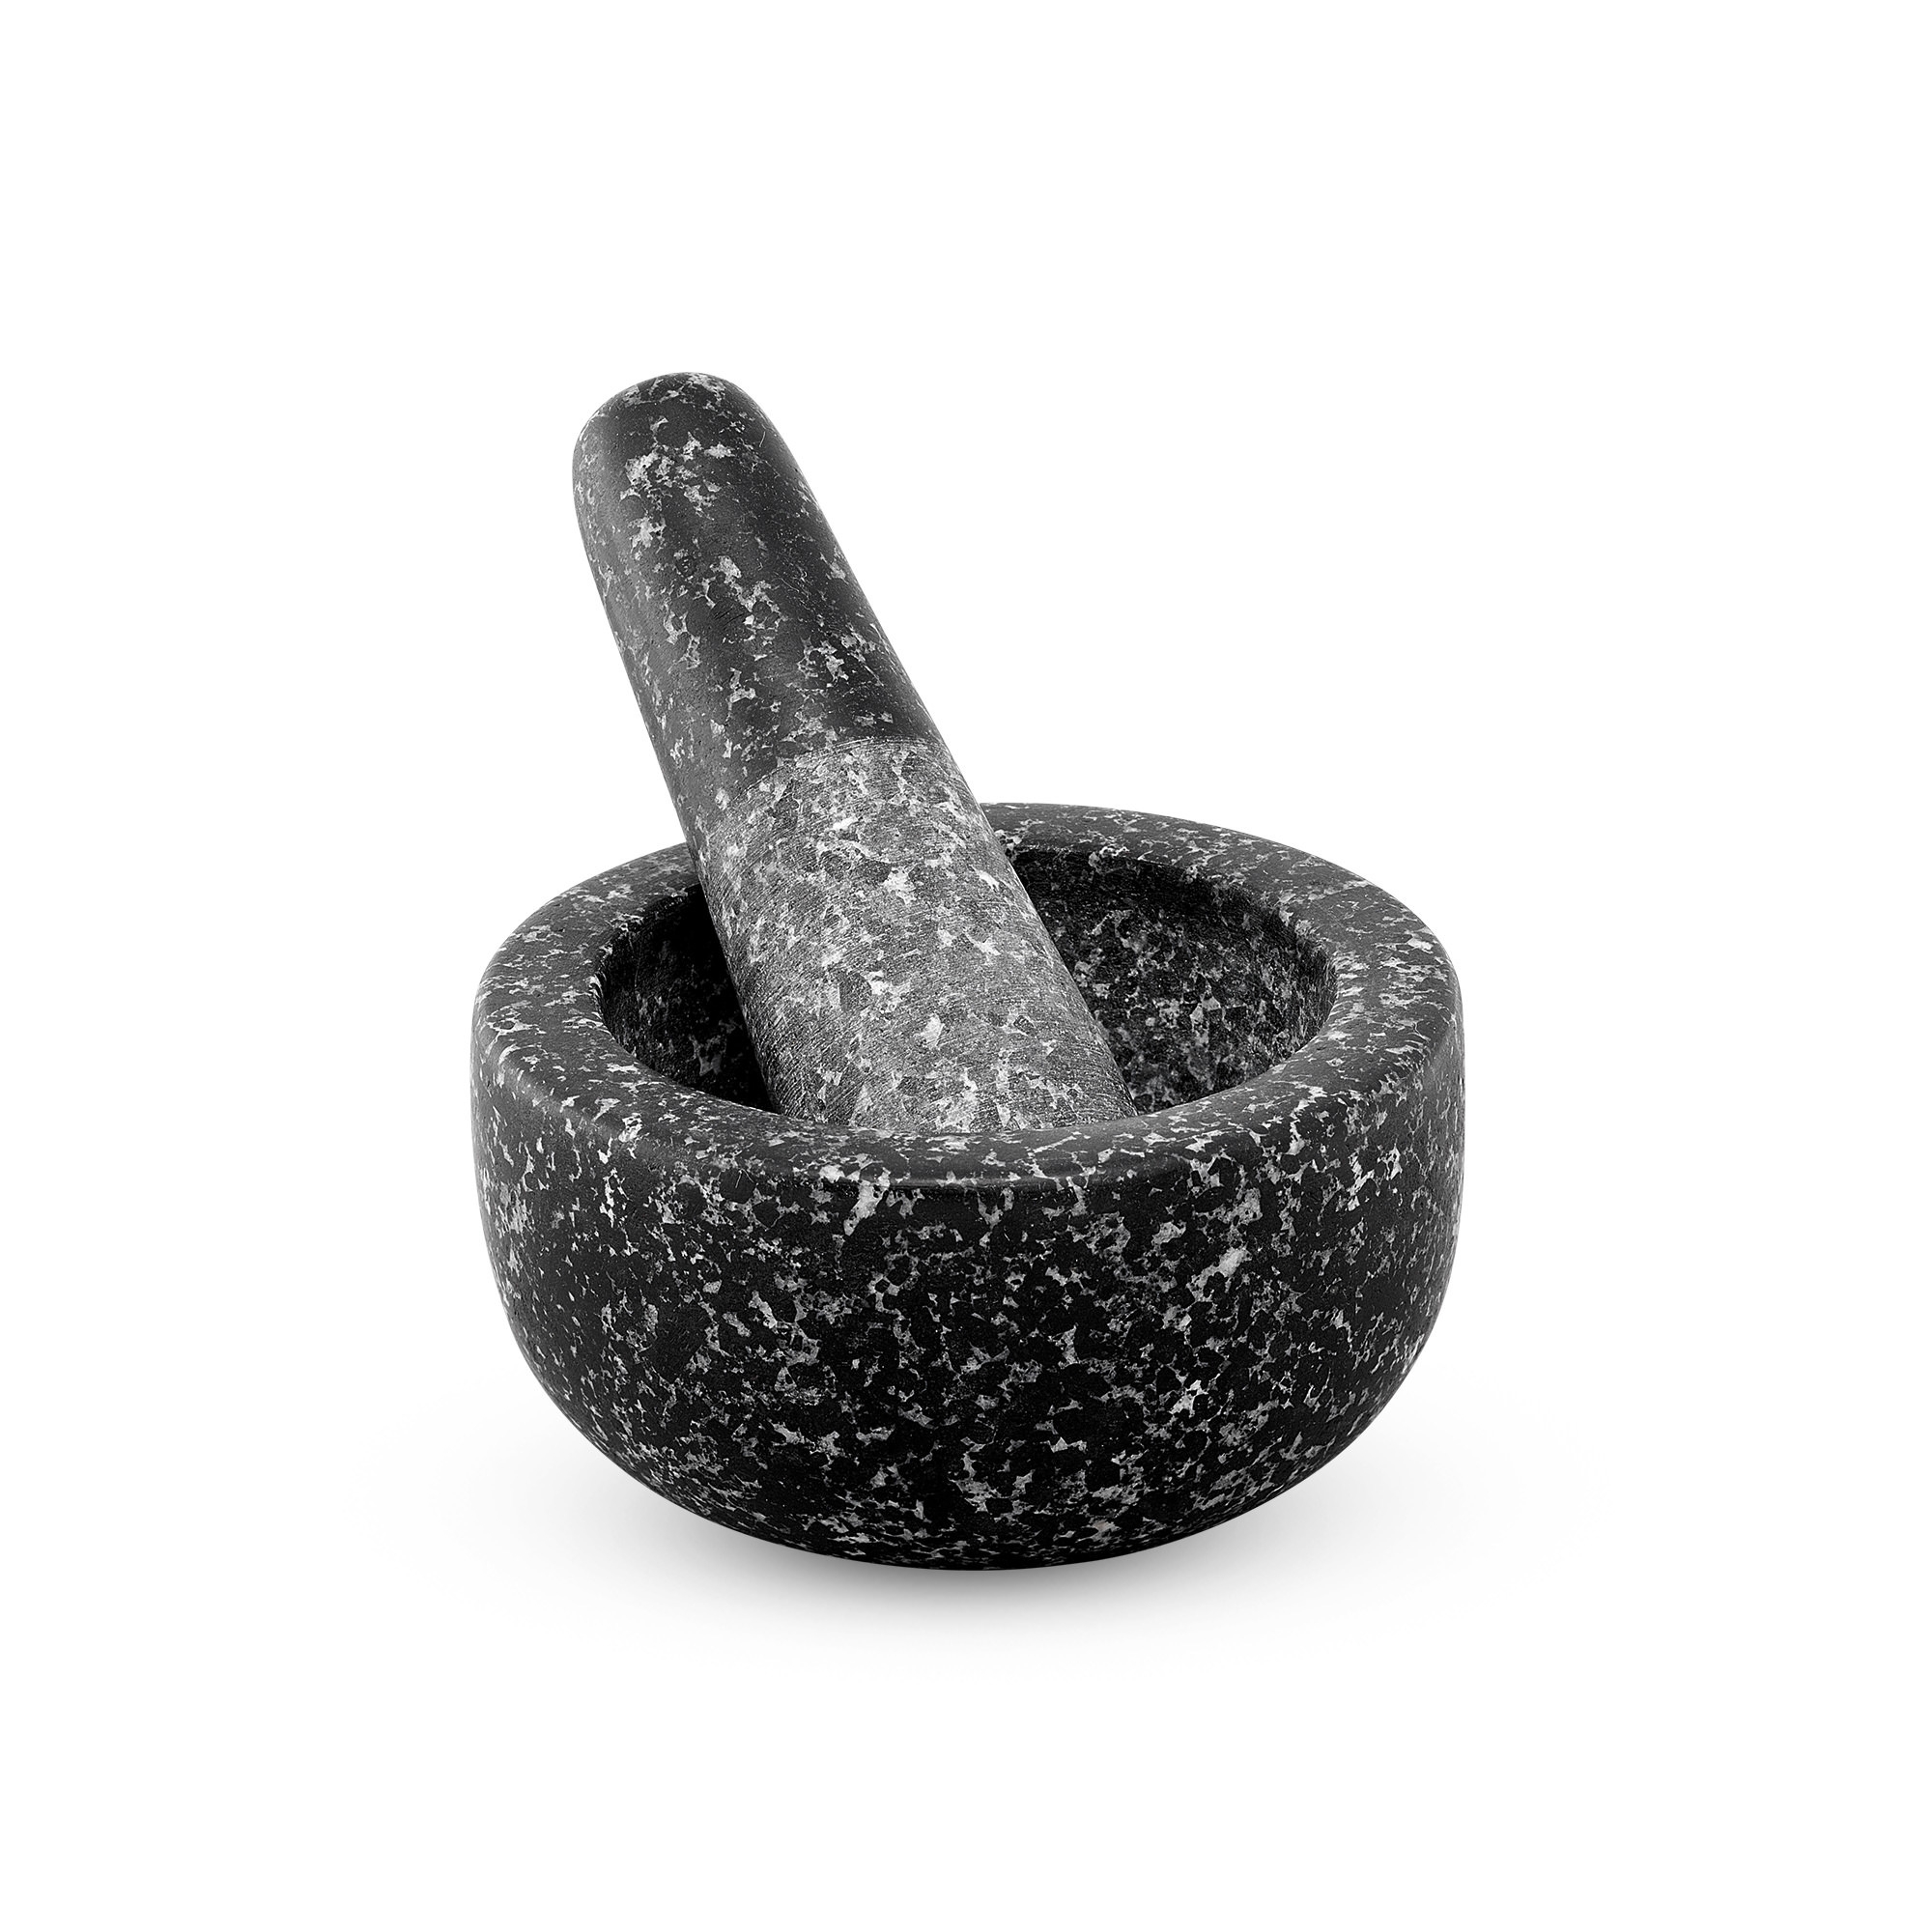 Avanti Black Speckled Mini Mortar and Pestle Solid Granite 10cm Image 1